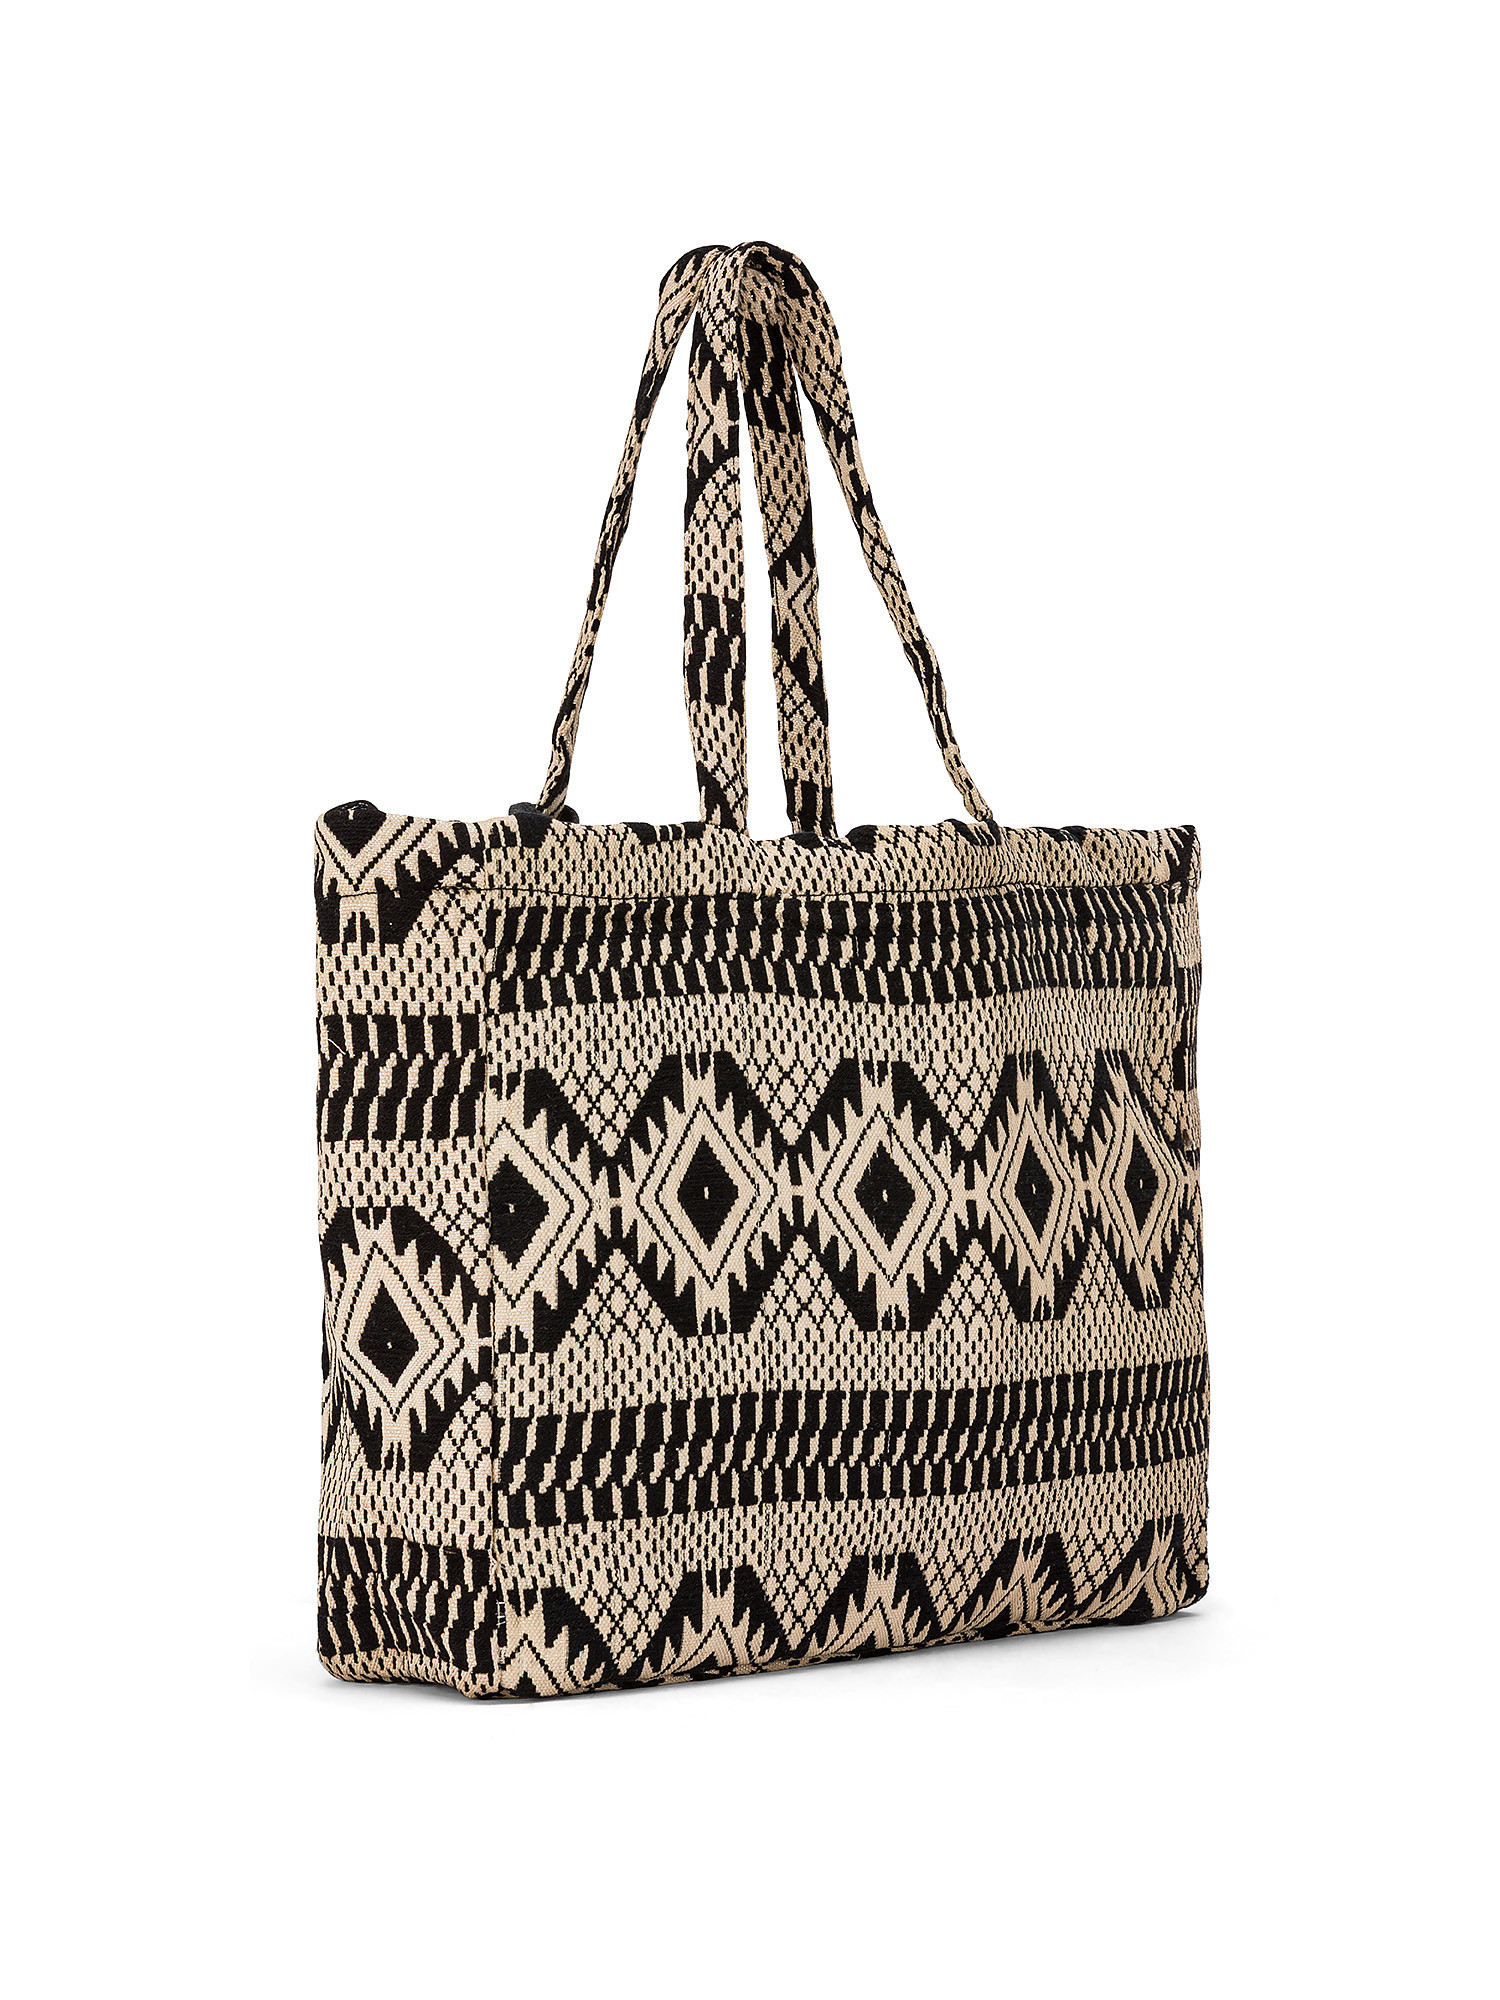 Koan - Patterned shopping bag, Brown, large image number 1